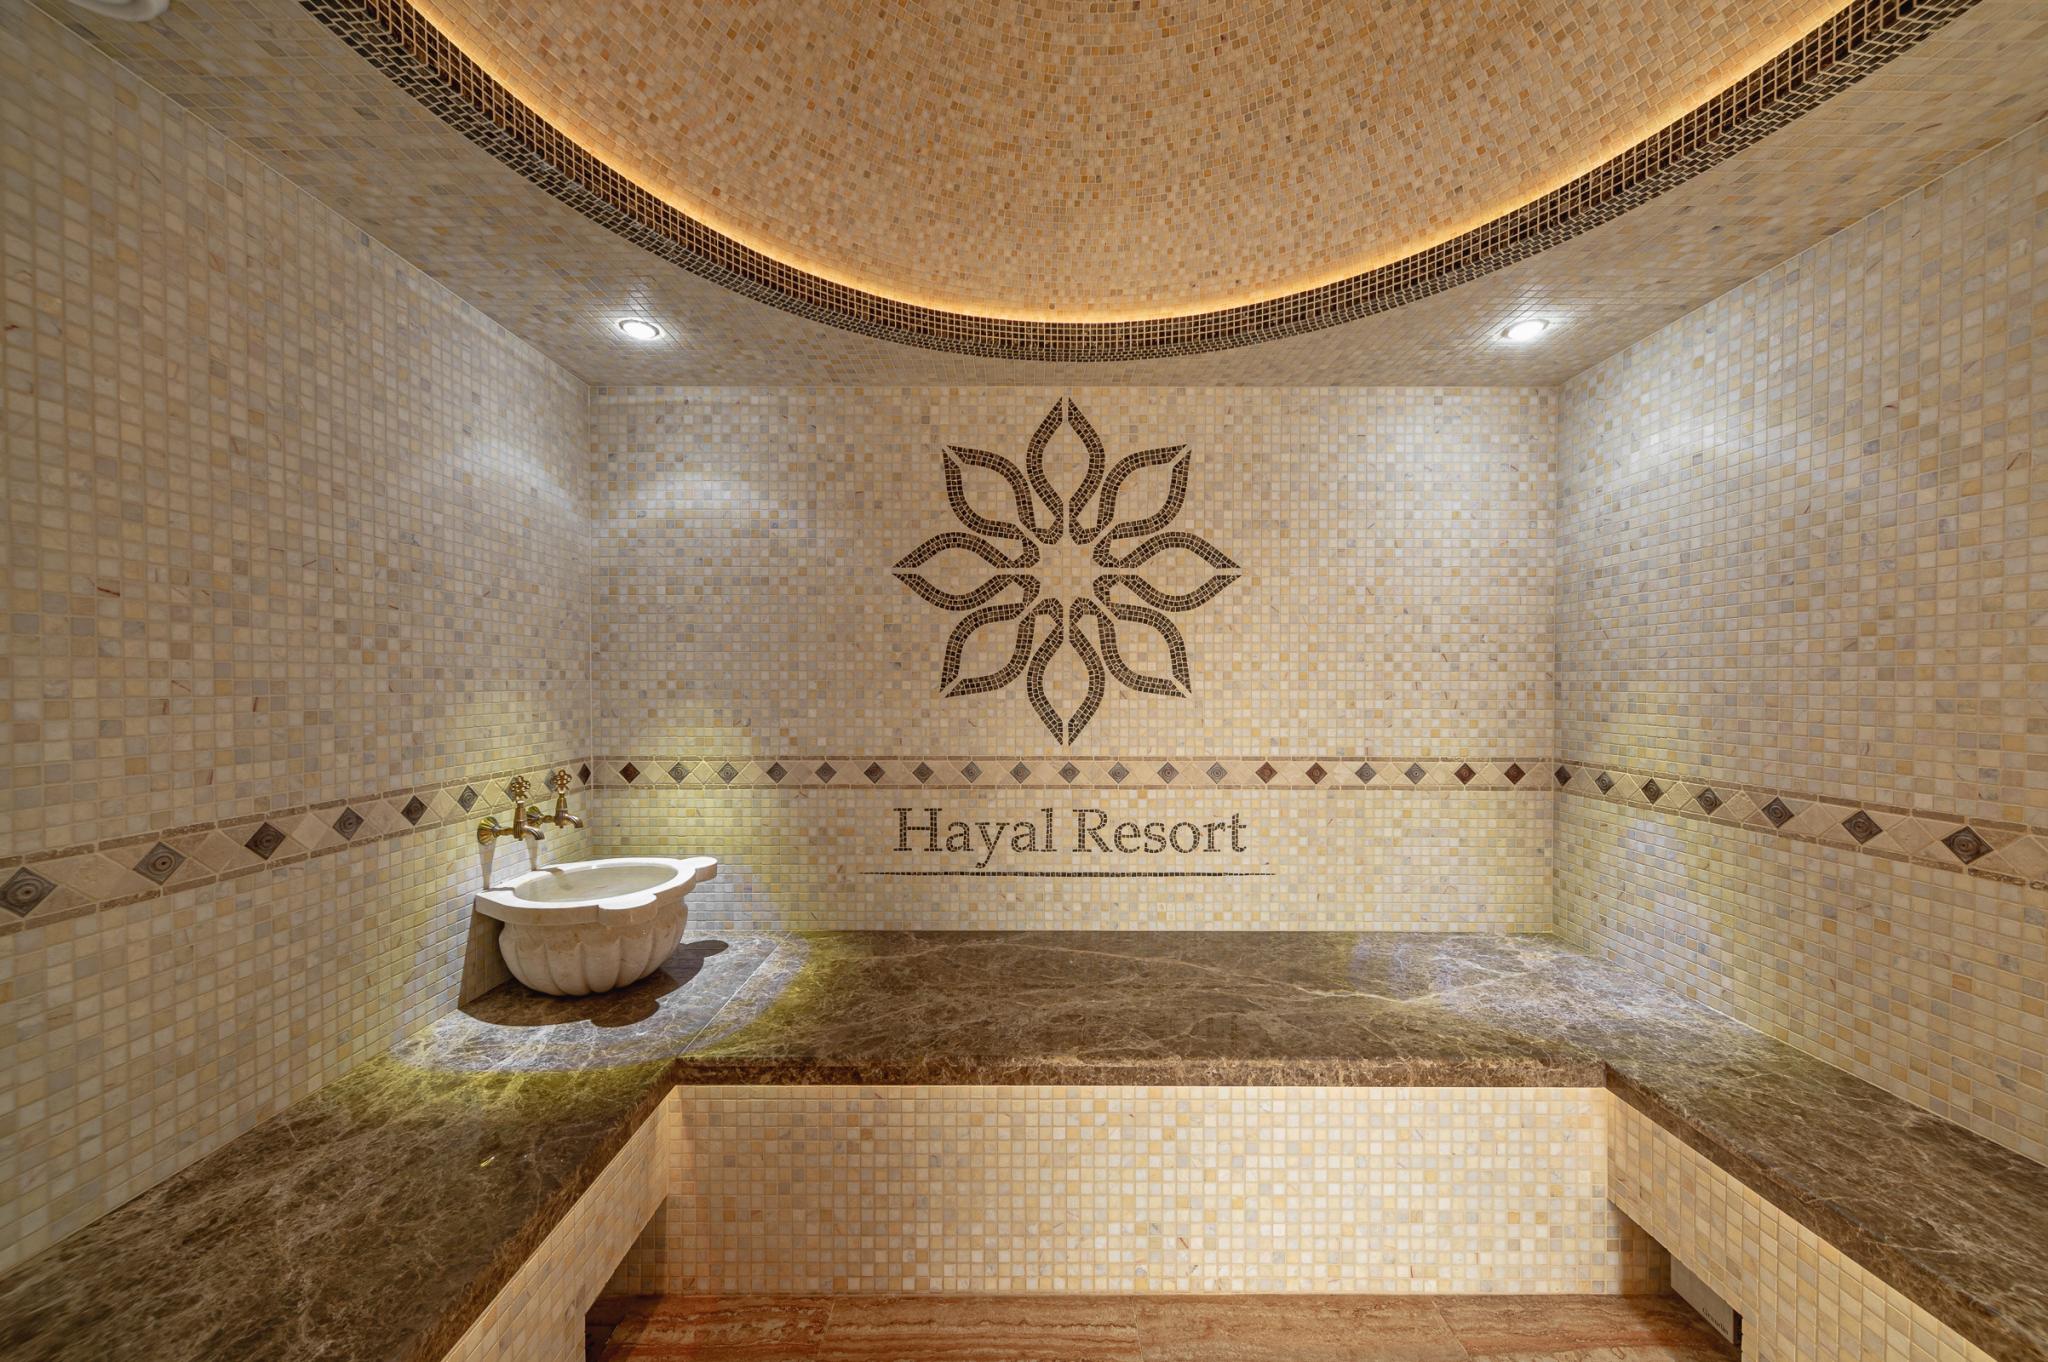 Хаял резорт. Хаял Резорт Алушта. Hayal Resort Алушта. Отель Хаял Резорт Ялта. Hayal Resort 4 спорт.